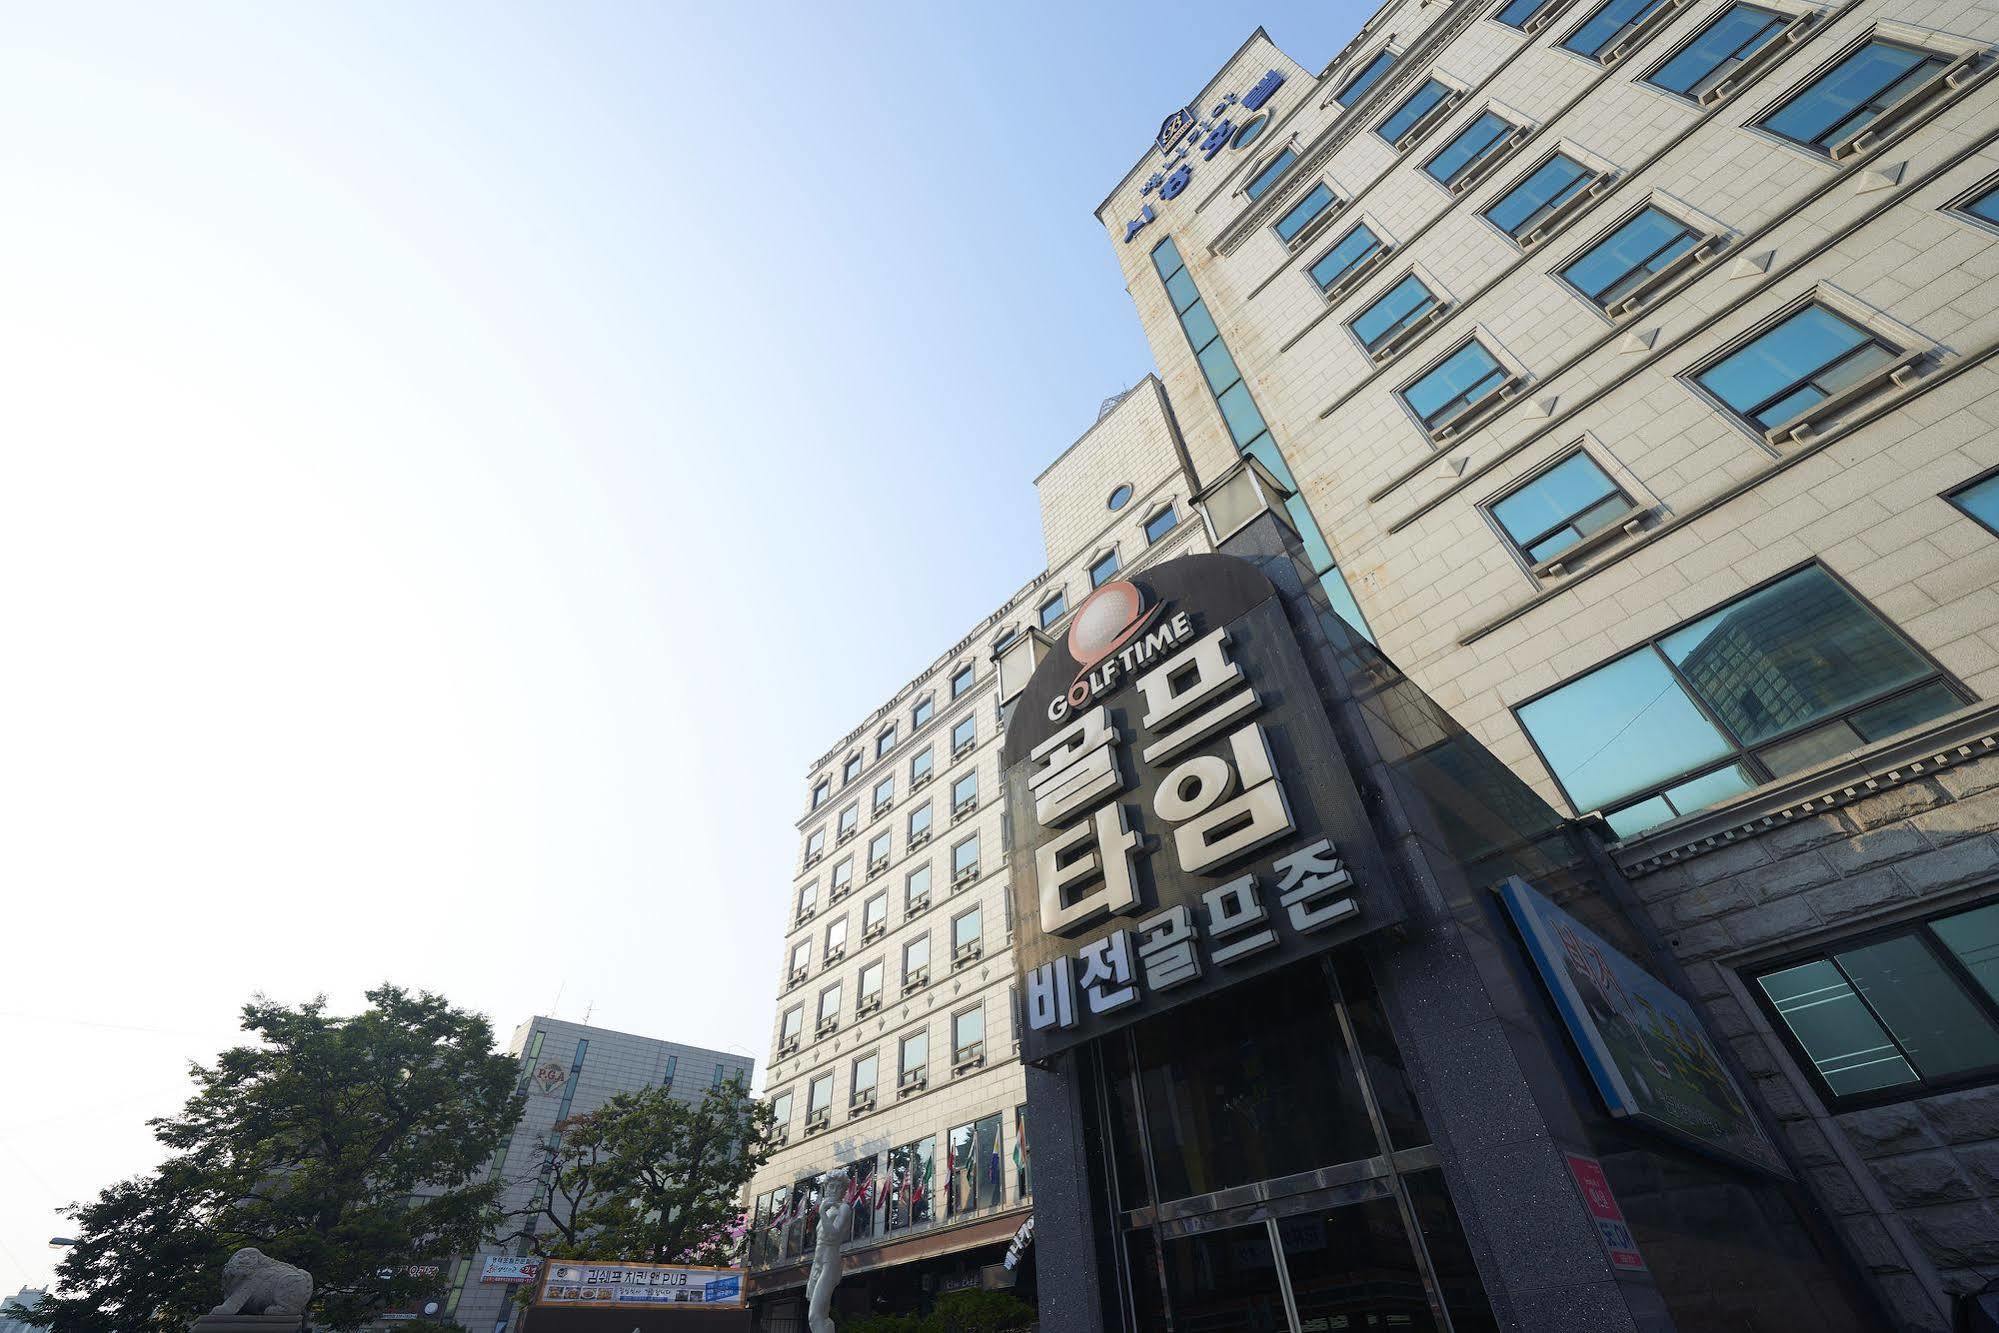 Benikea Premier Hotel Siheung Exterior photo